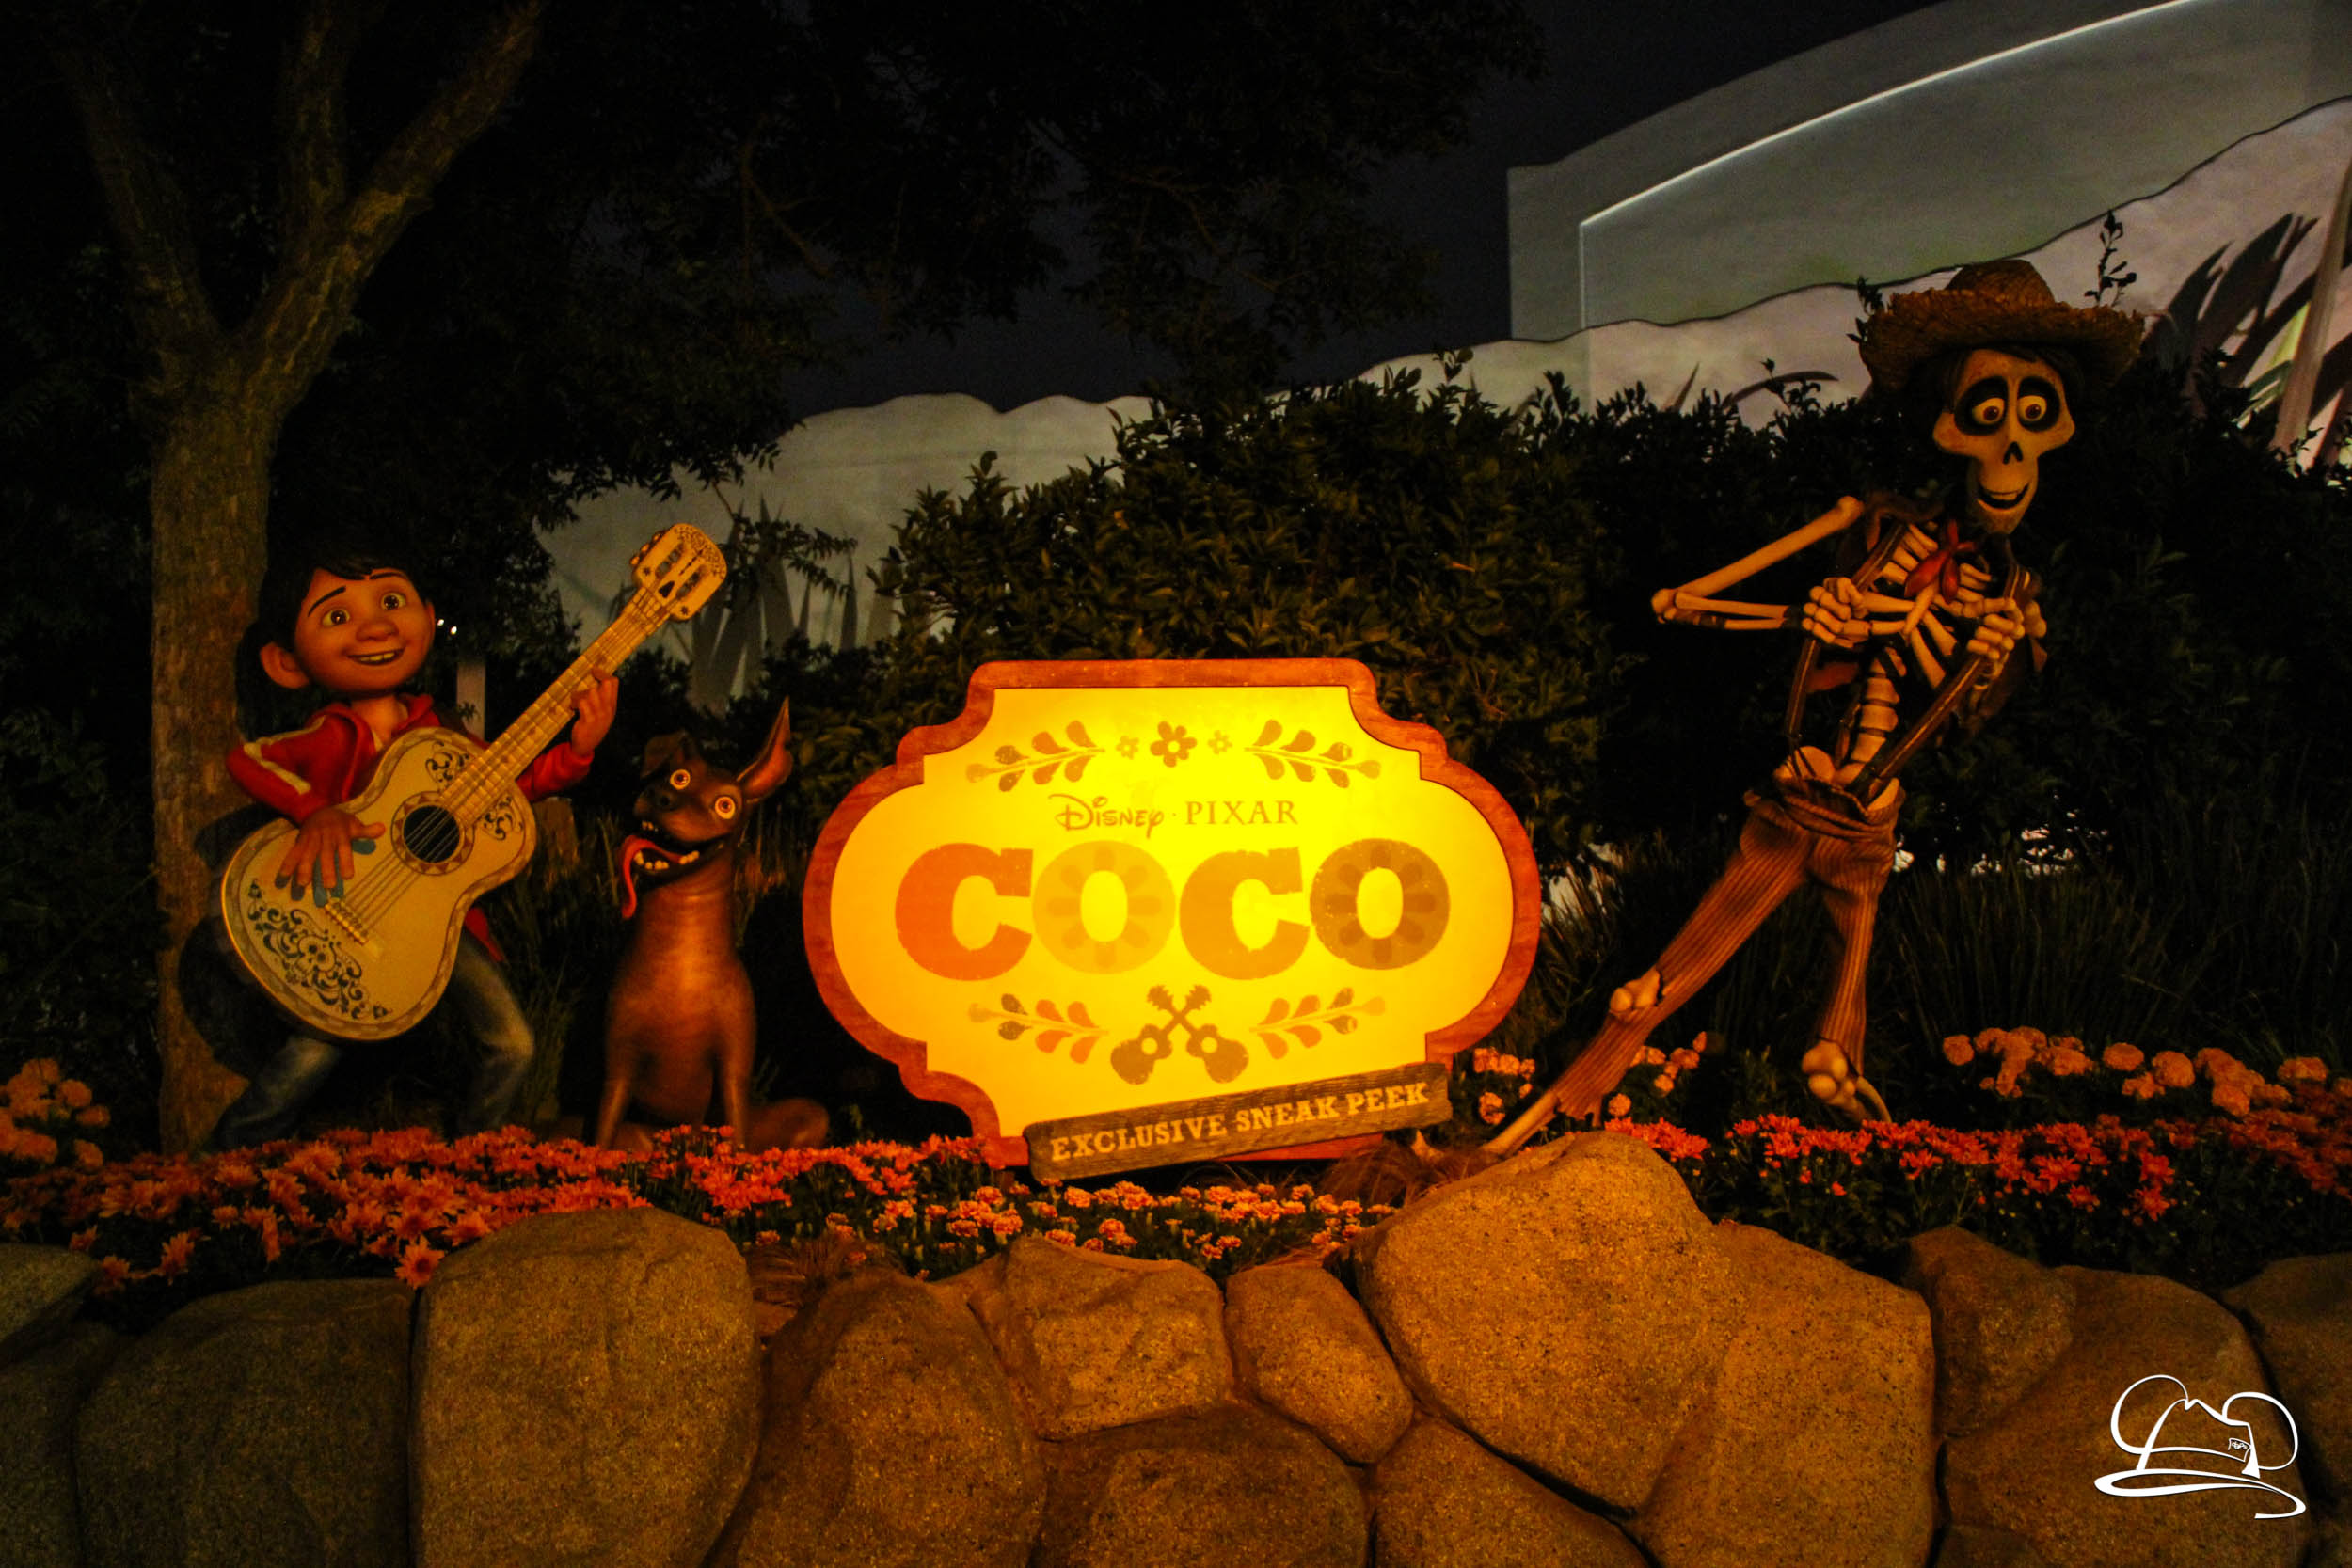 Disney-Pixar’s Coco Sneak Peek Delights Disney California Adventure